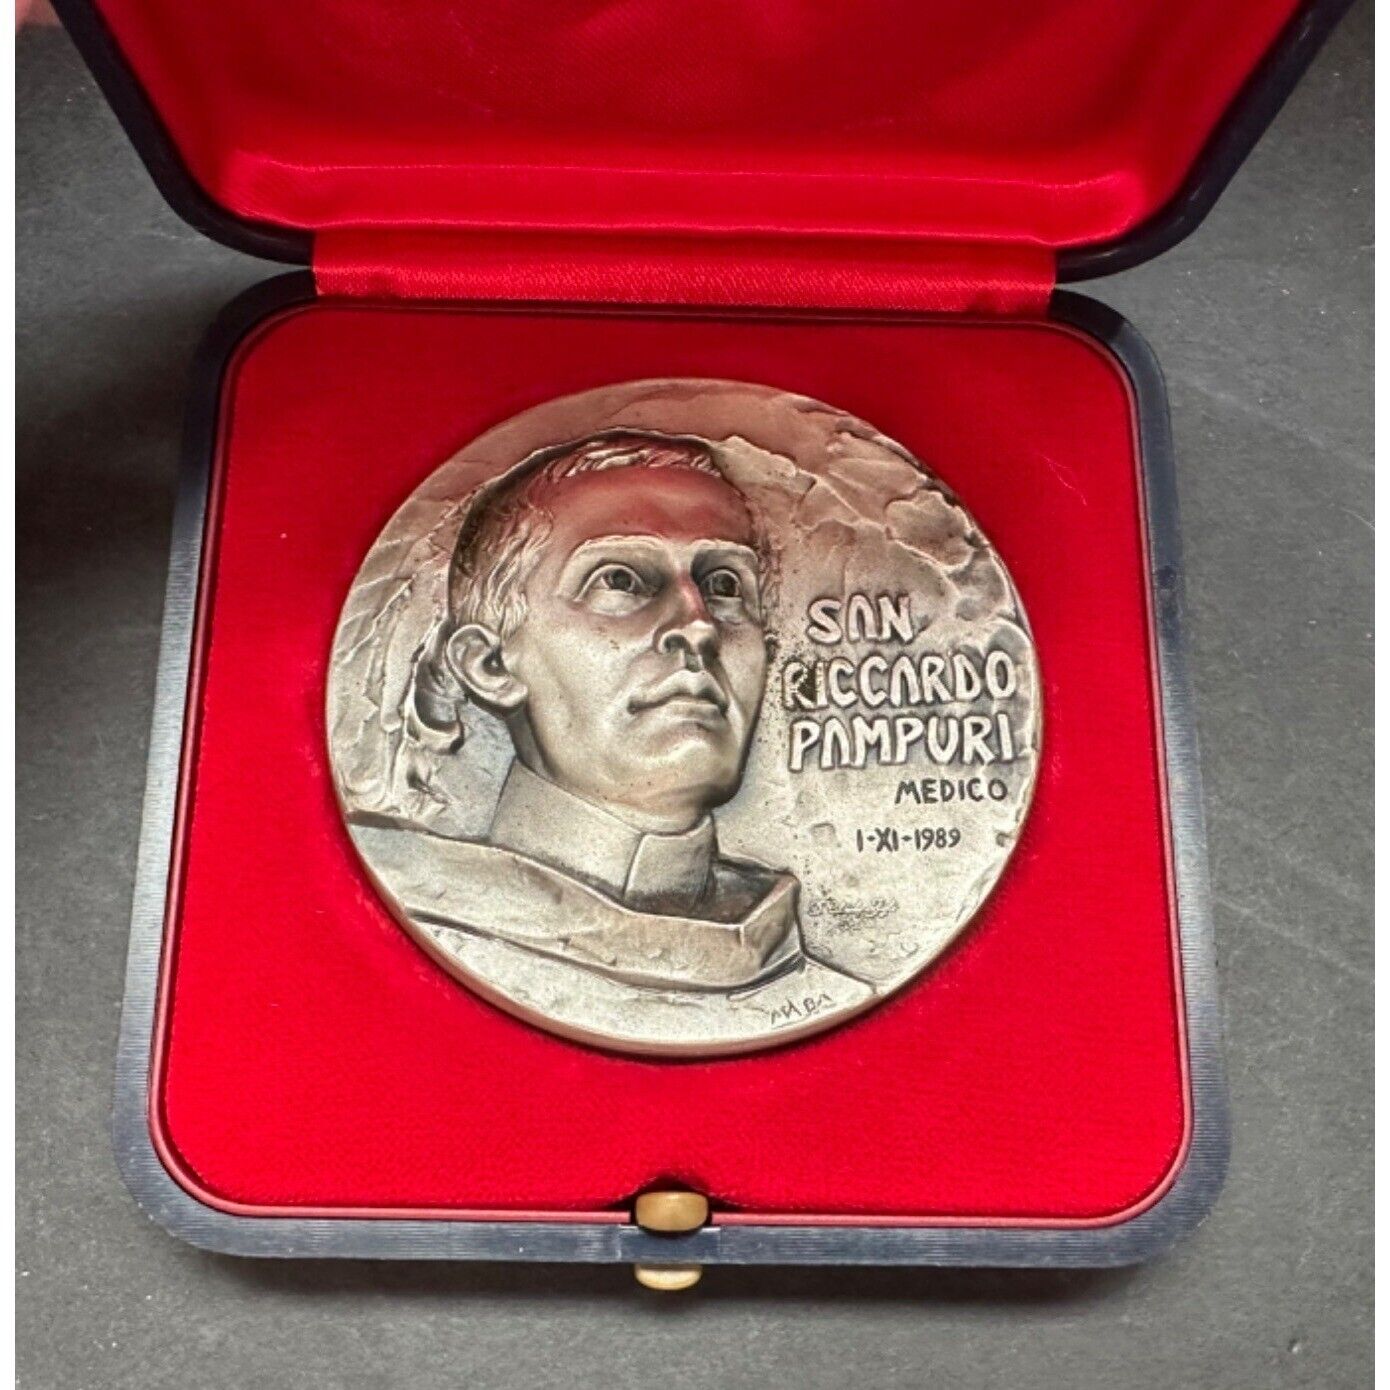 Hospitaller Order of San Giovanni Medal of San Riccardo Pampuri doctor